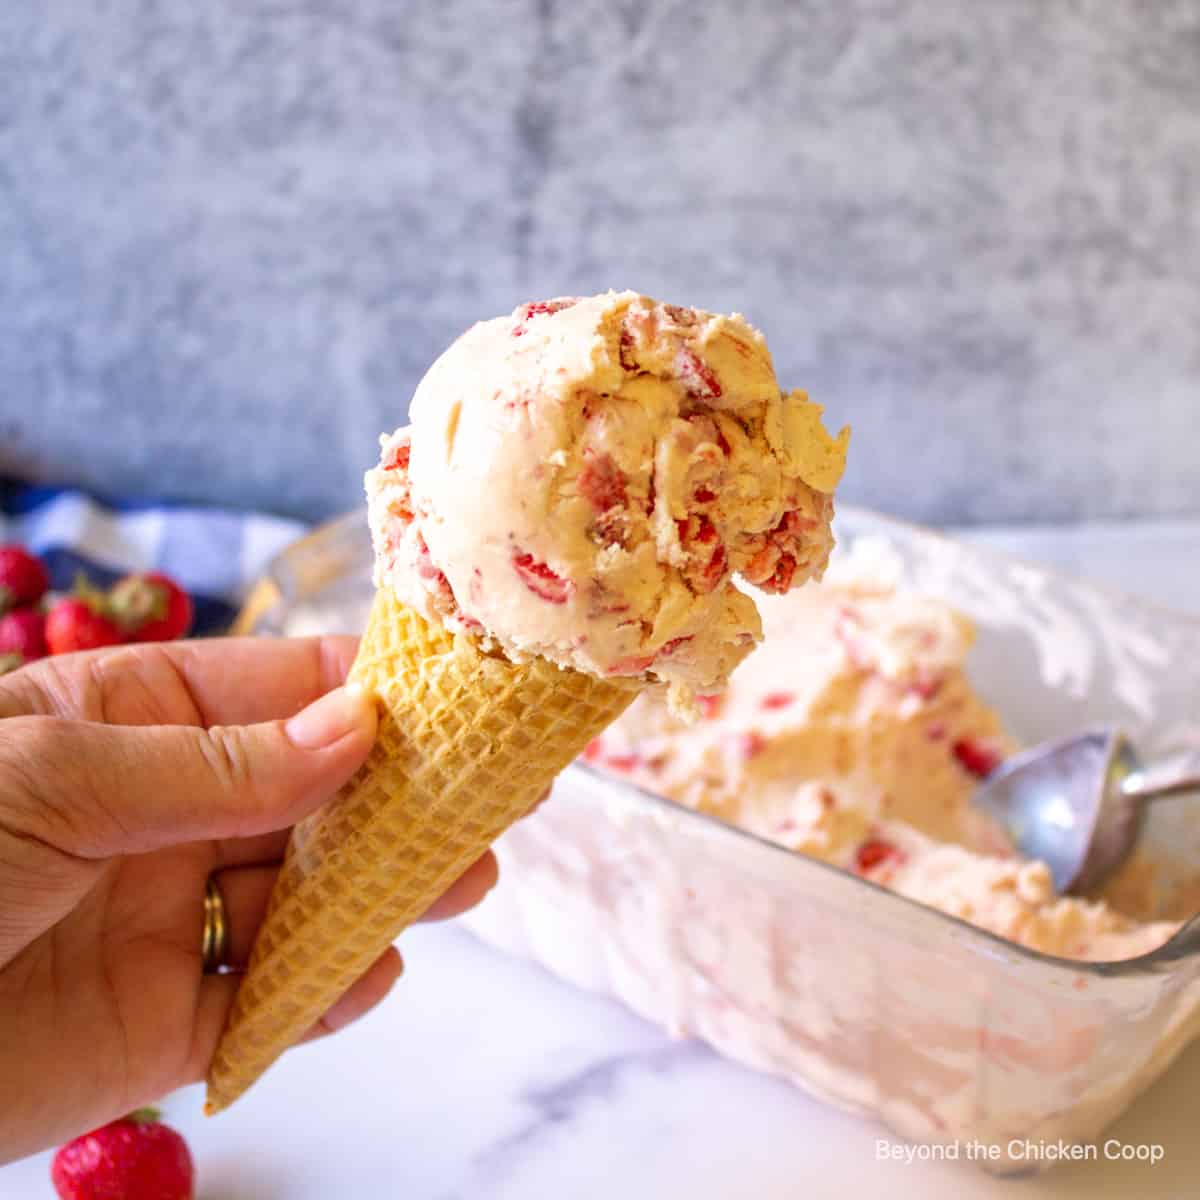 A scoop of ice cream on an ice cream cone.